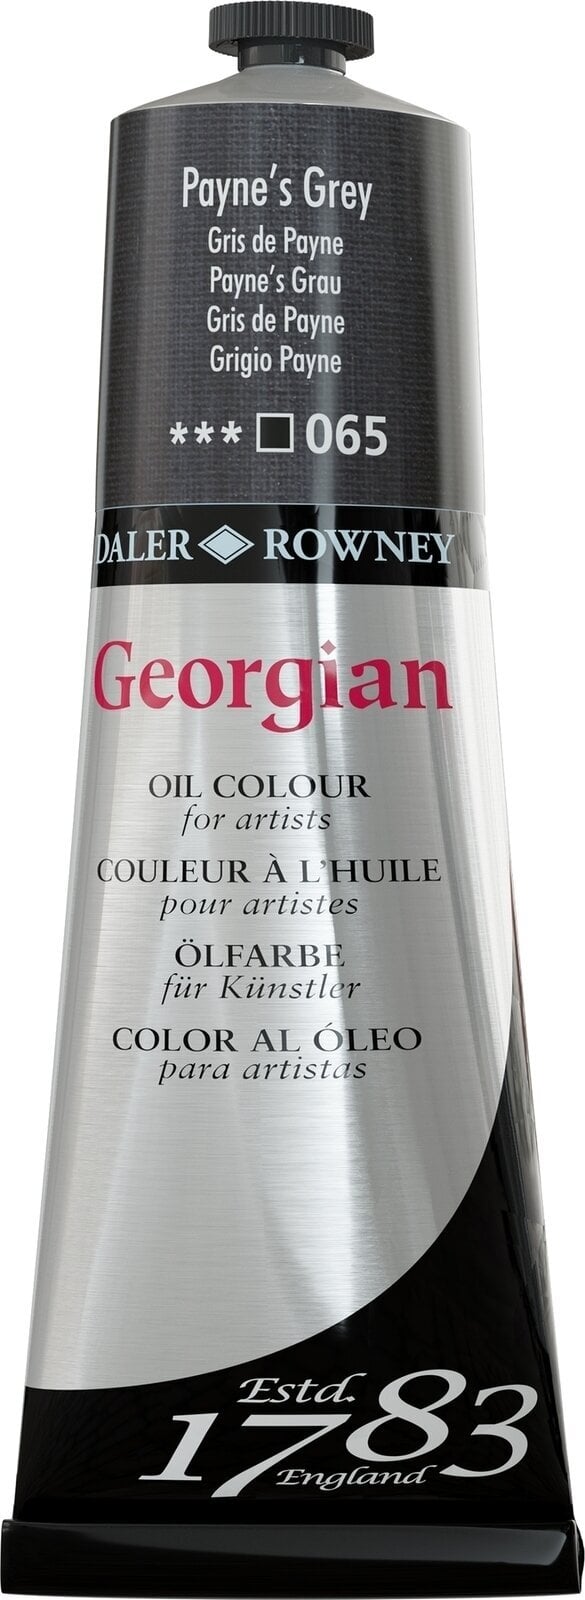 Oil colour Daler Rowney Georgian Oil Paint Payne's Grey 225 ml 1 pc